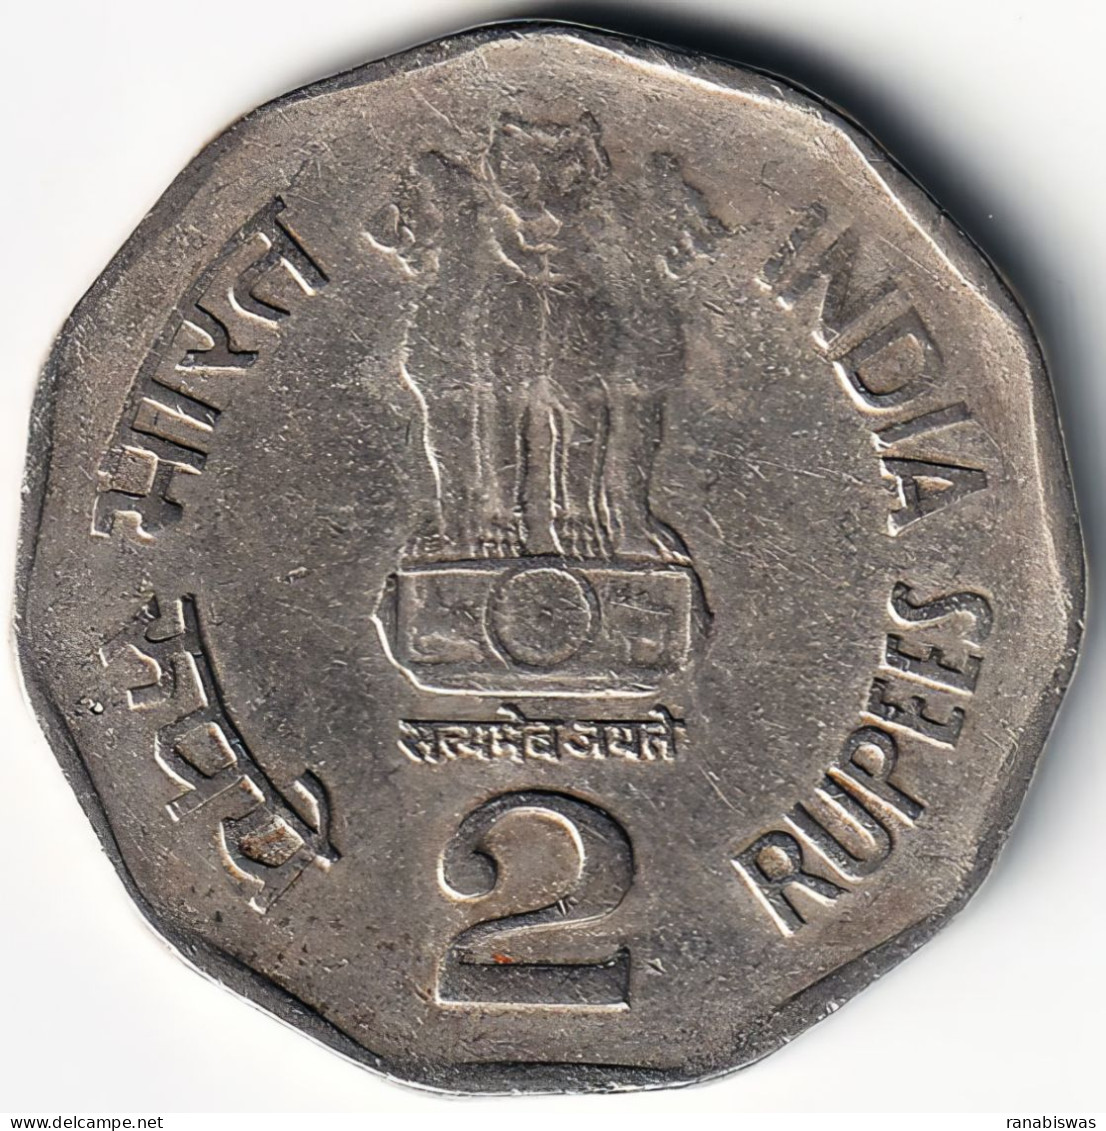 INDIA COIN LOT 121, 2 RUPEES 1999, CHHATRAPATI SHIVAJI, NOIDA MINT, XF, SCARE - India